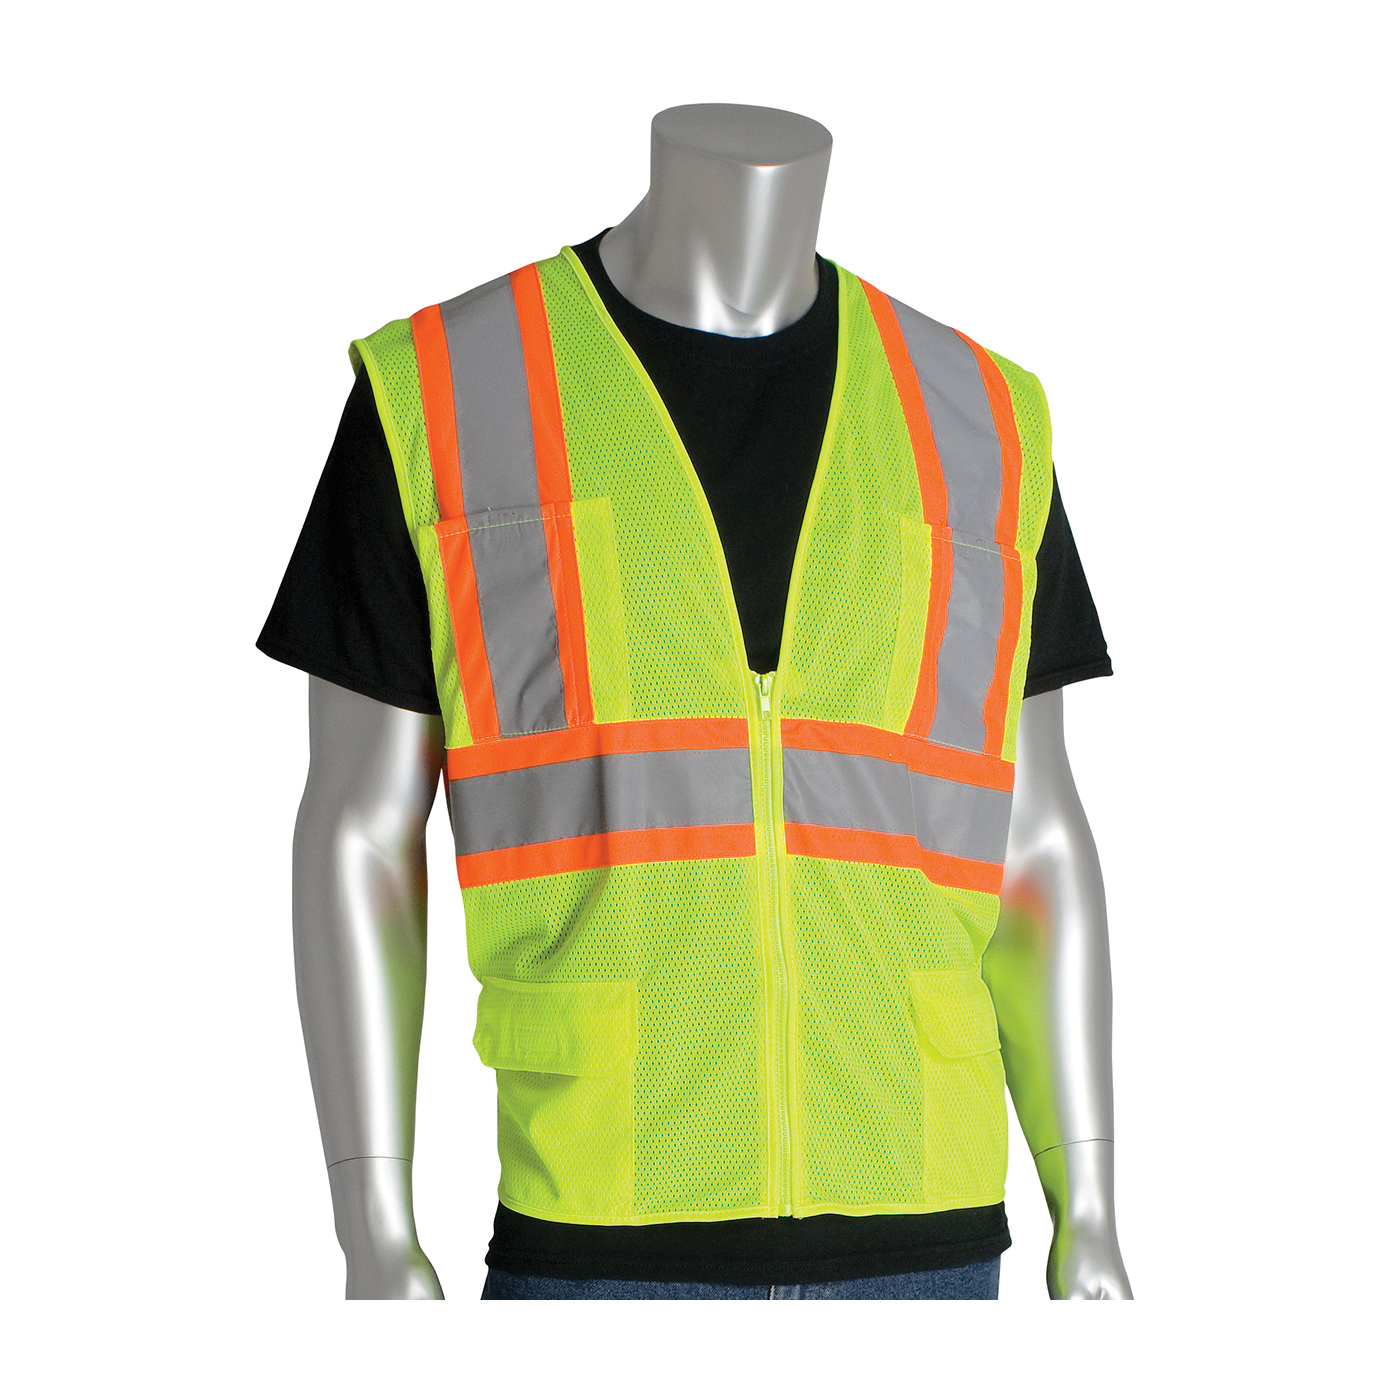 PIP® 302-MVZPLY-L 2-Tone Safety Vest, L, Hi-Viz Lime Yellow, Polyester Mesh, Zipper Closure, 6 Pockets, ANSI Class: Class 2, Specifications Met: ANSI 107 Type R